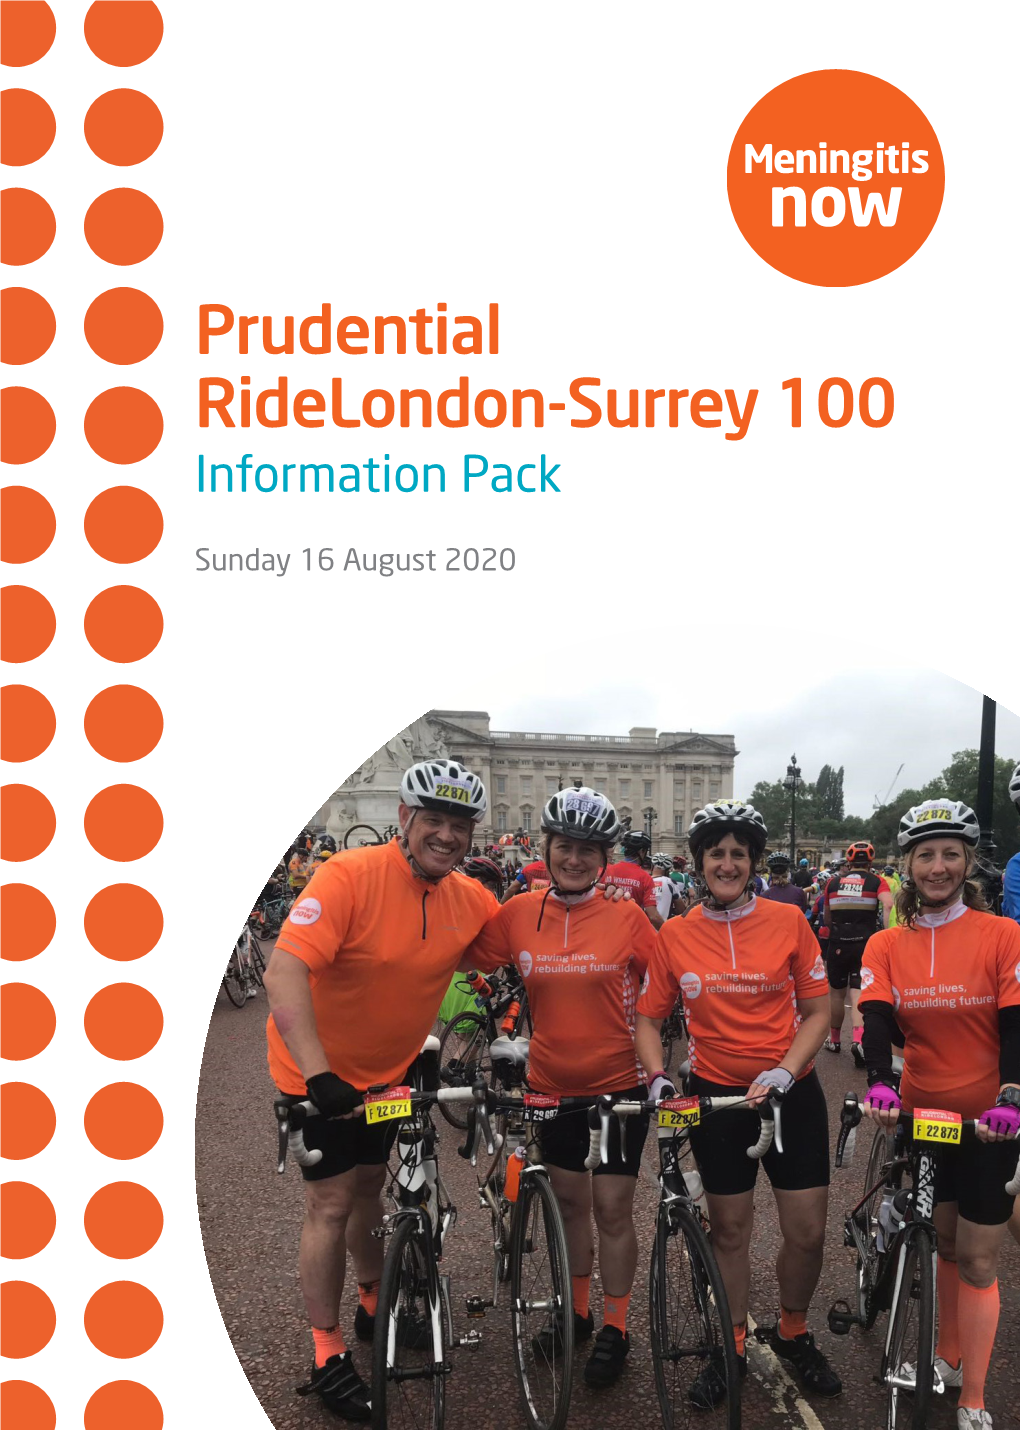 Prudential Ridelondon-Surrey 100 Information Pack